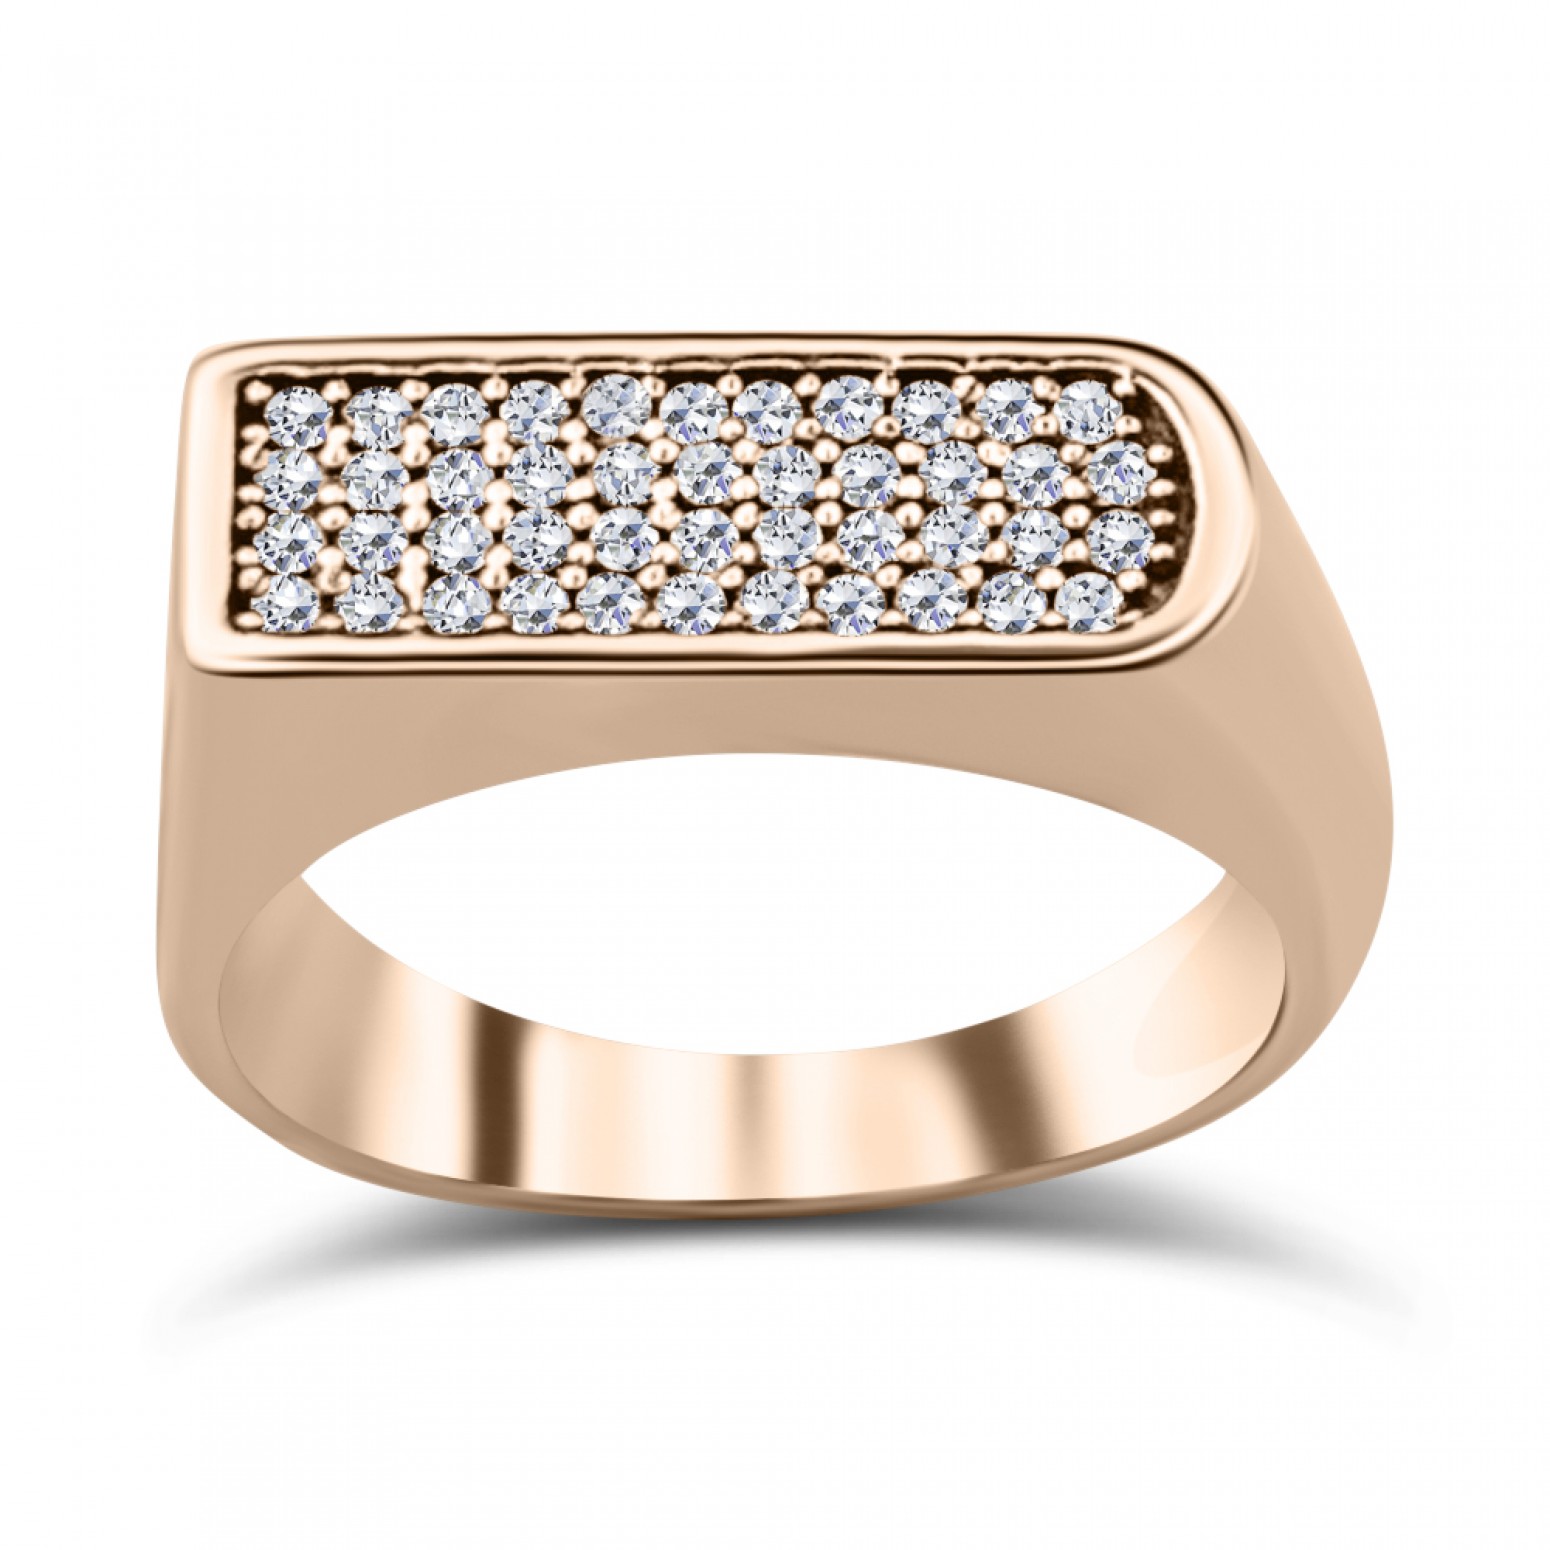 Multistone ring K9 pink gold with zircon, da3248 RINGS Κοσμηματα - chrilia.gr